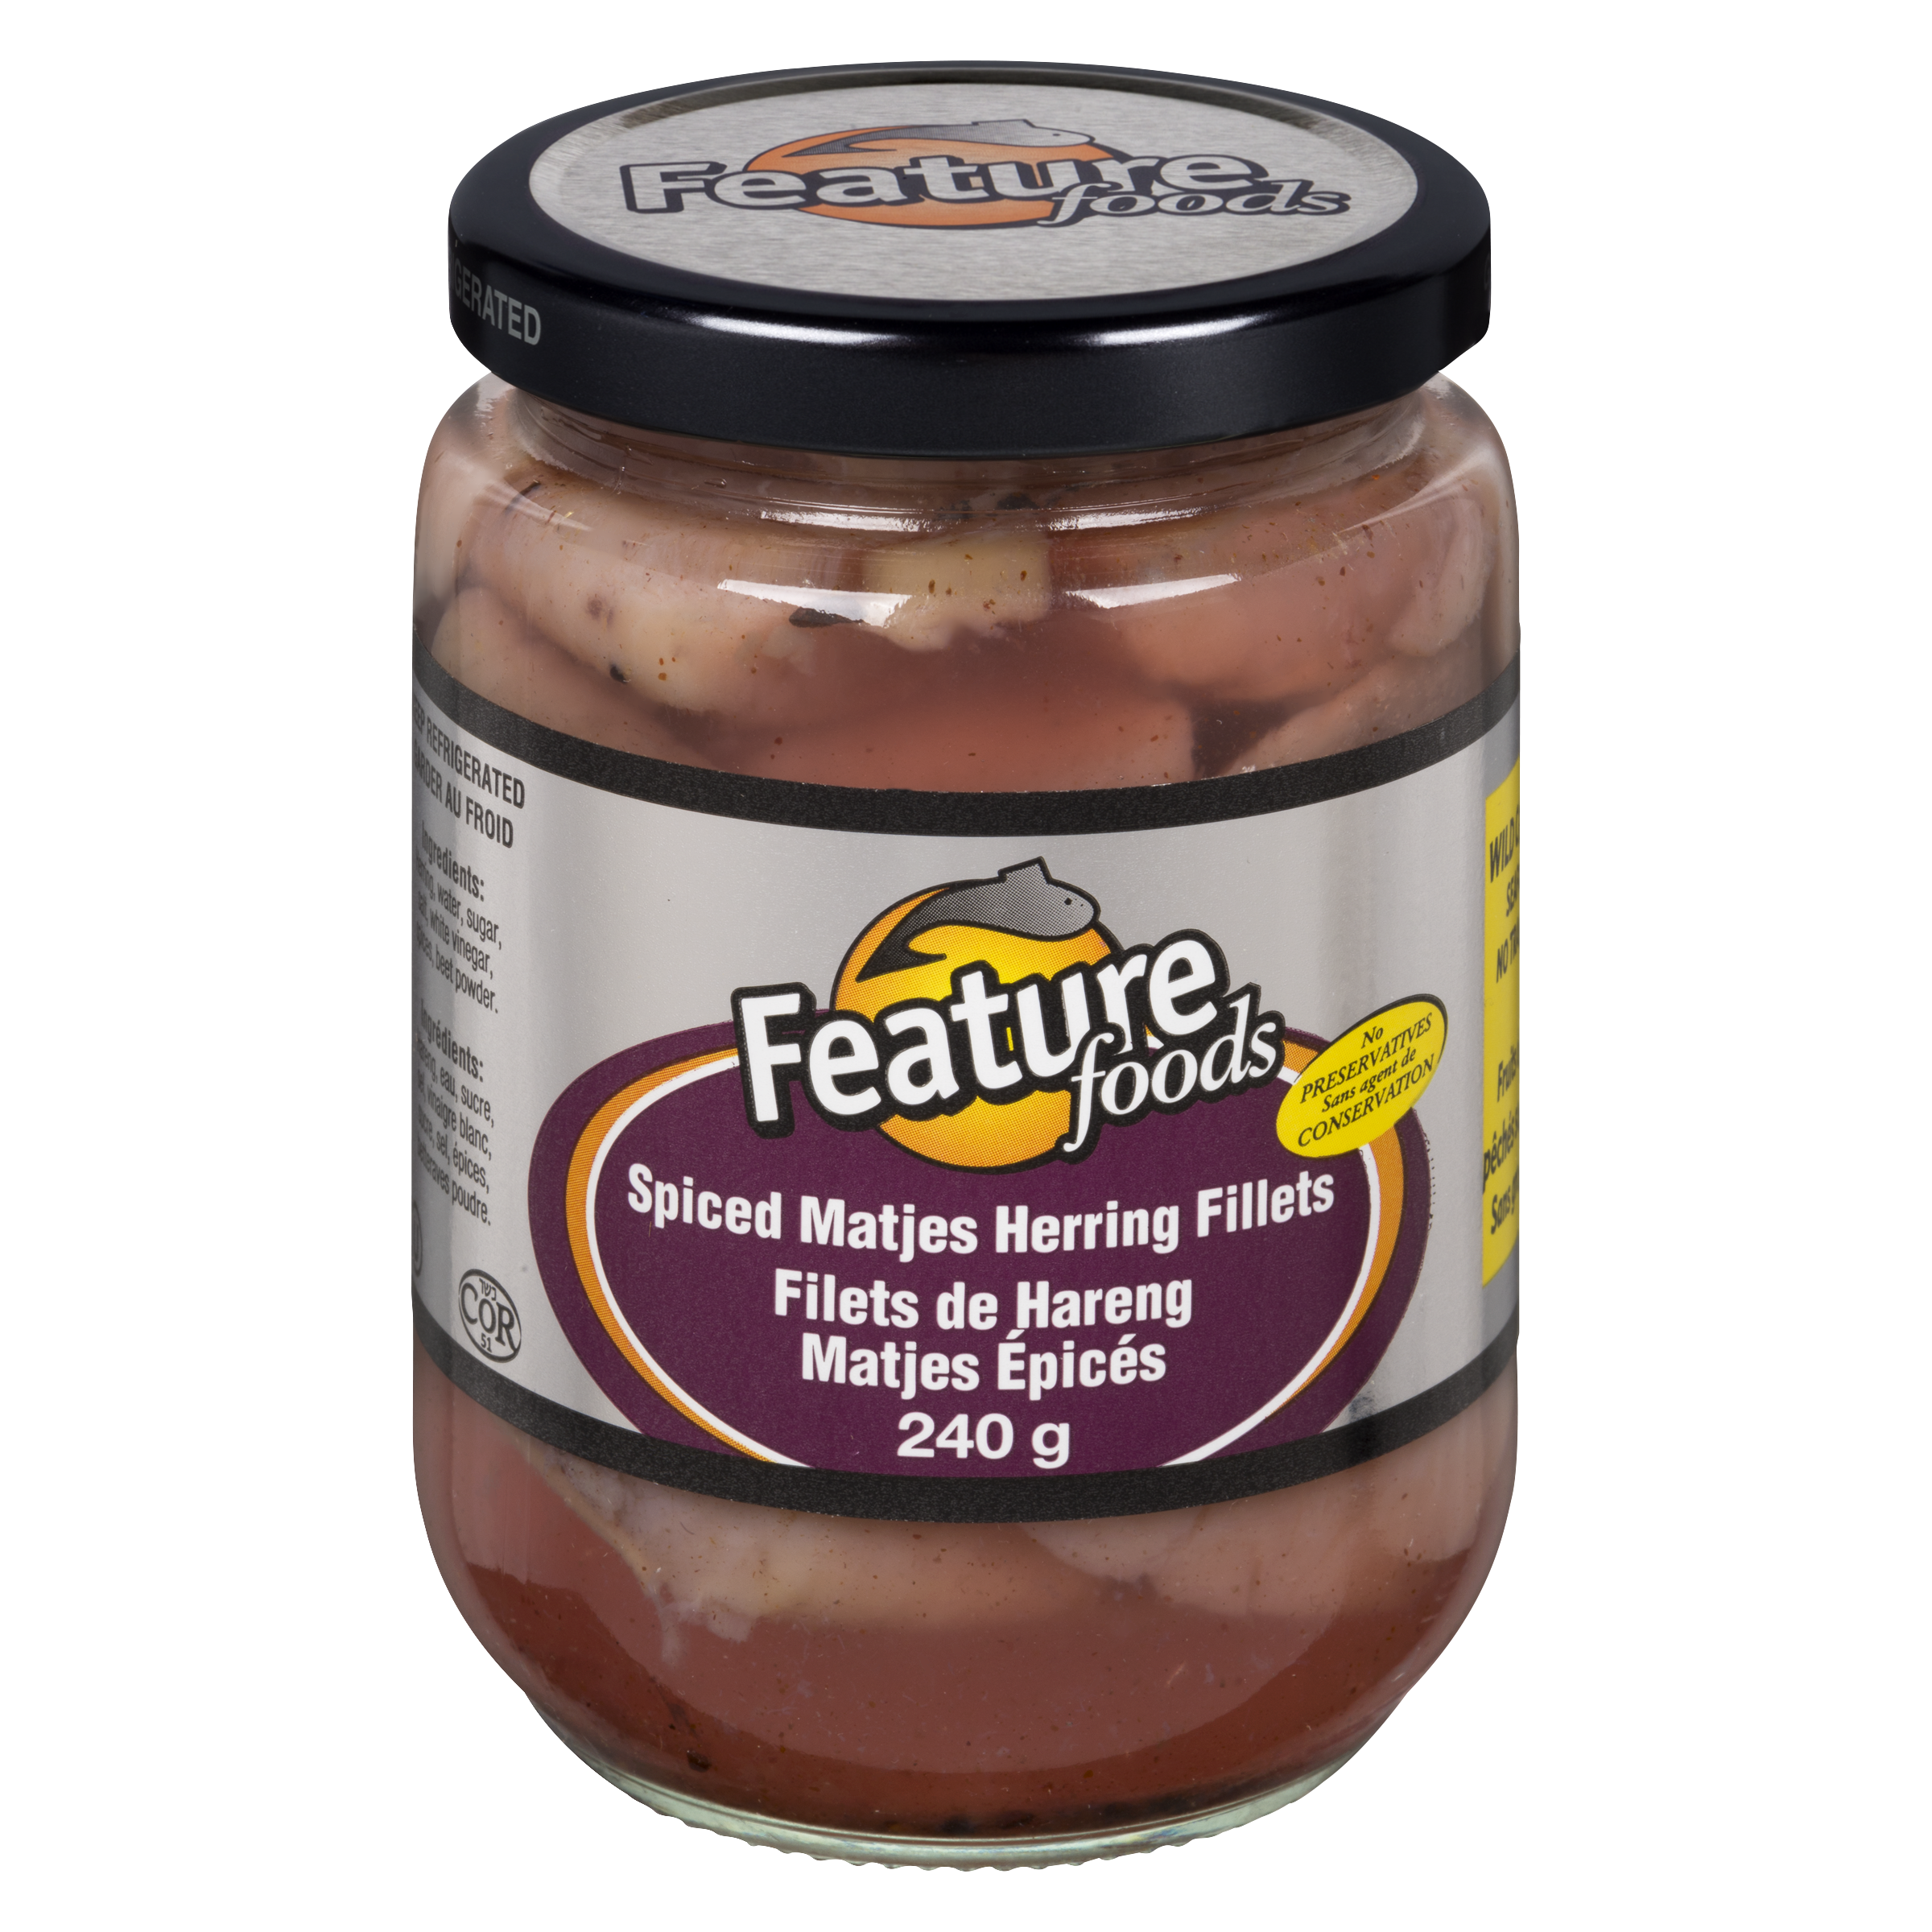 Feature Foods Spiced Matjes Herring Fillets 240g Jar